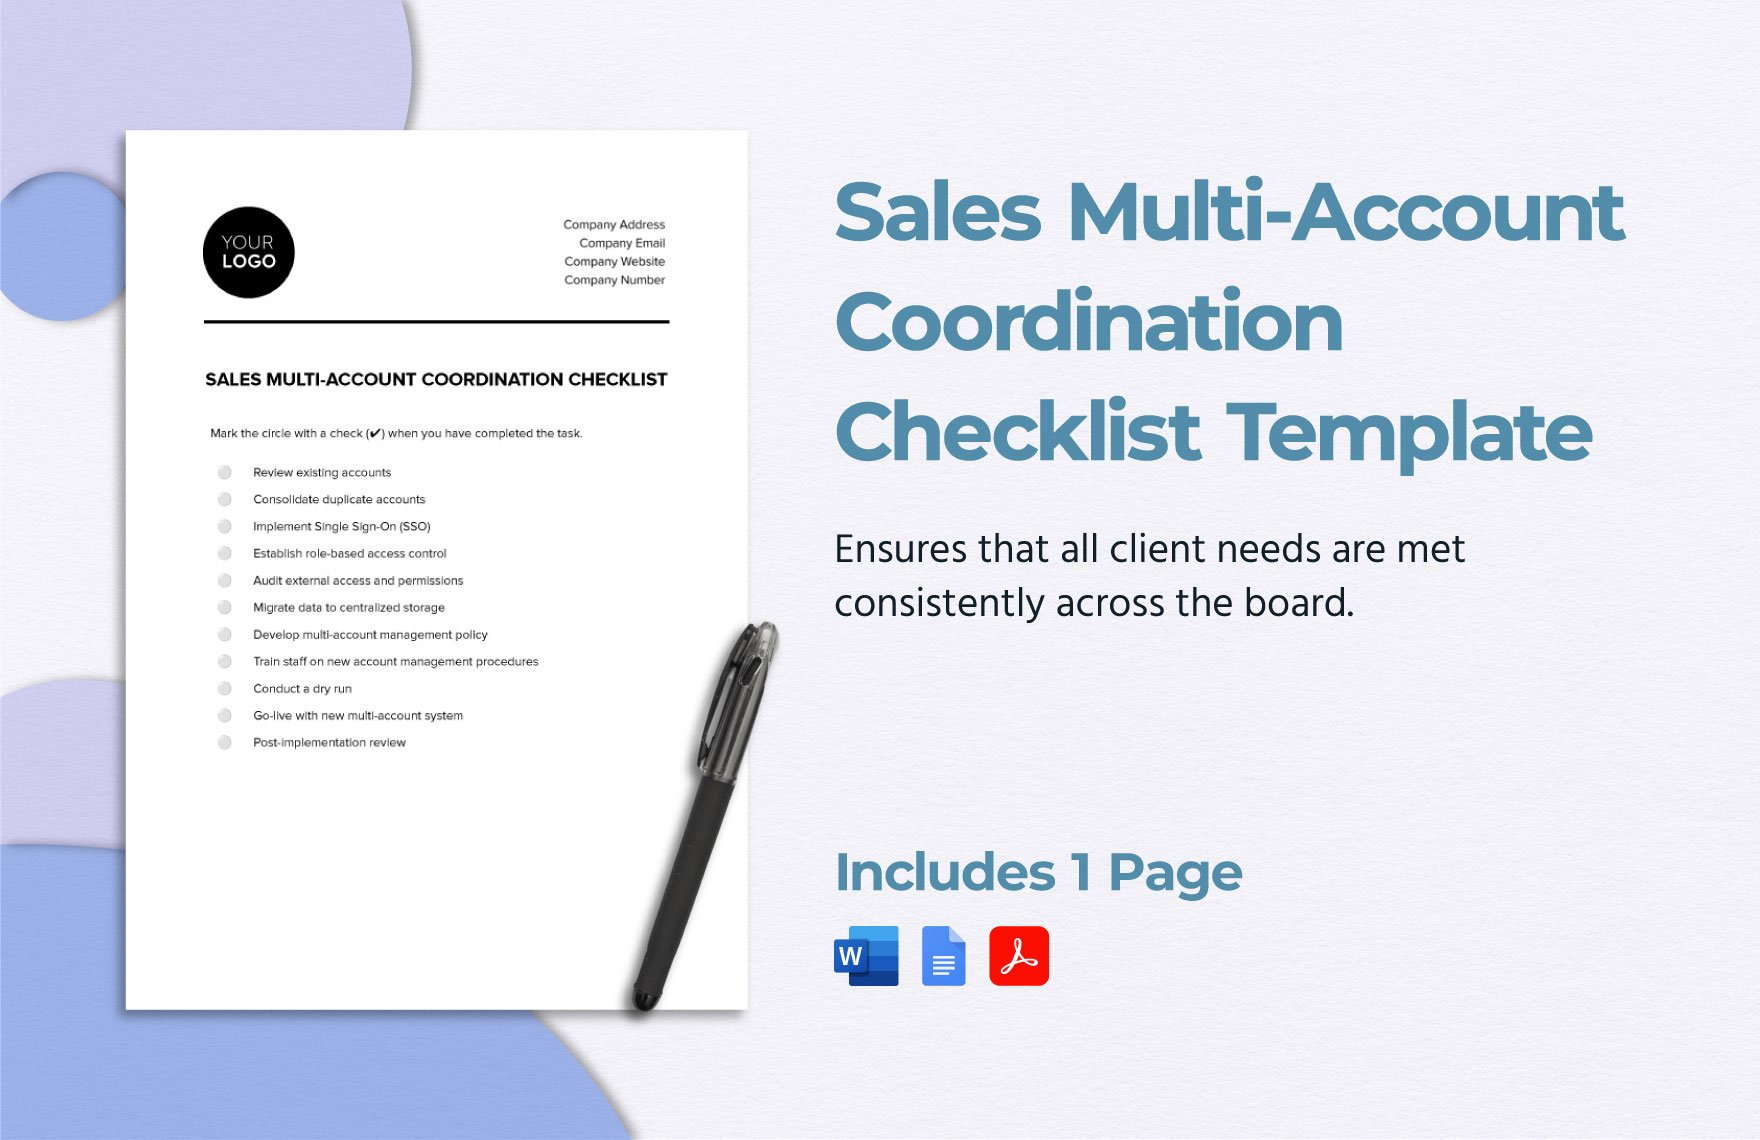 Sales Multi-Account Coordination Checklist Template